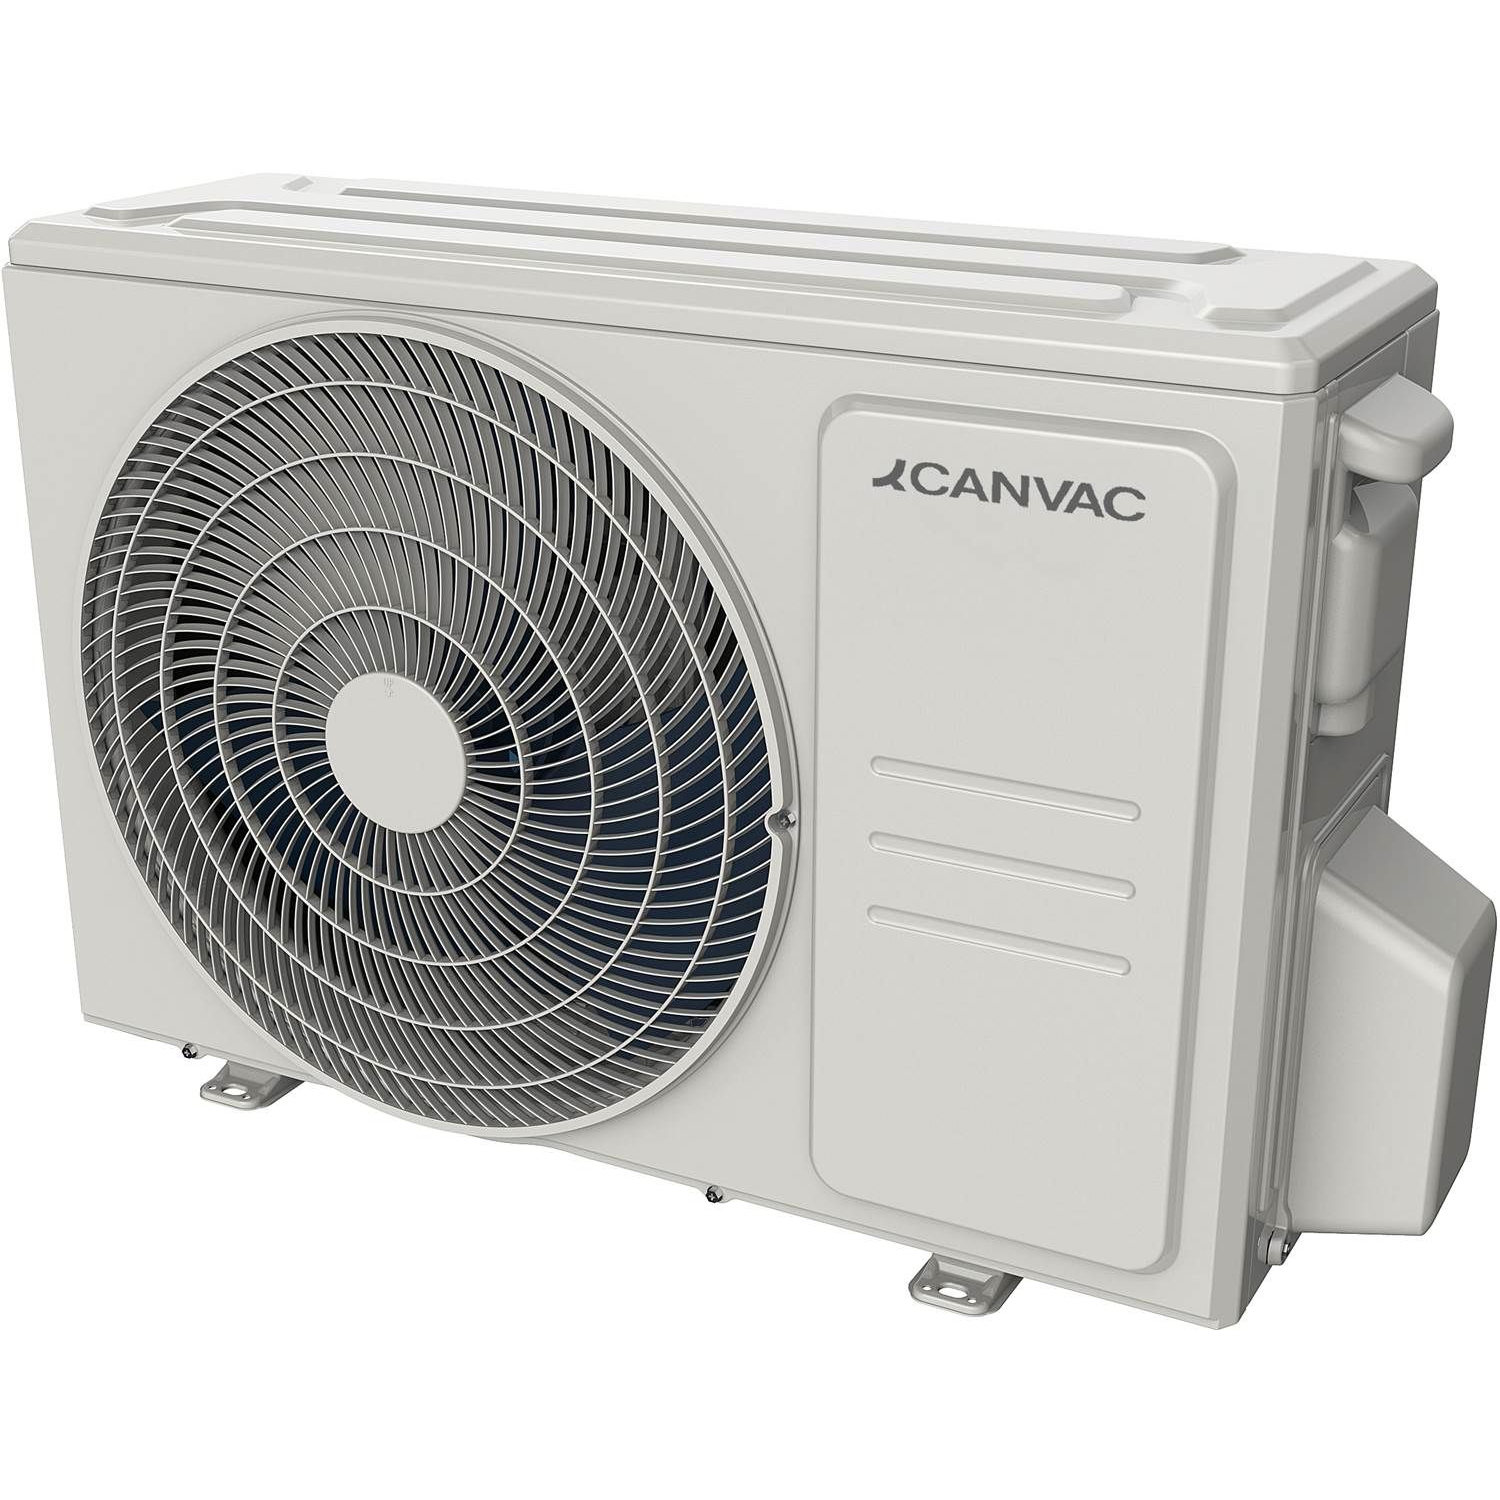 122307 Canvac Q Heat 1220-E1 - Varmepumpe Hus & Have,Klima/ ventilation,Varmepumper 2190004683 1220-E1